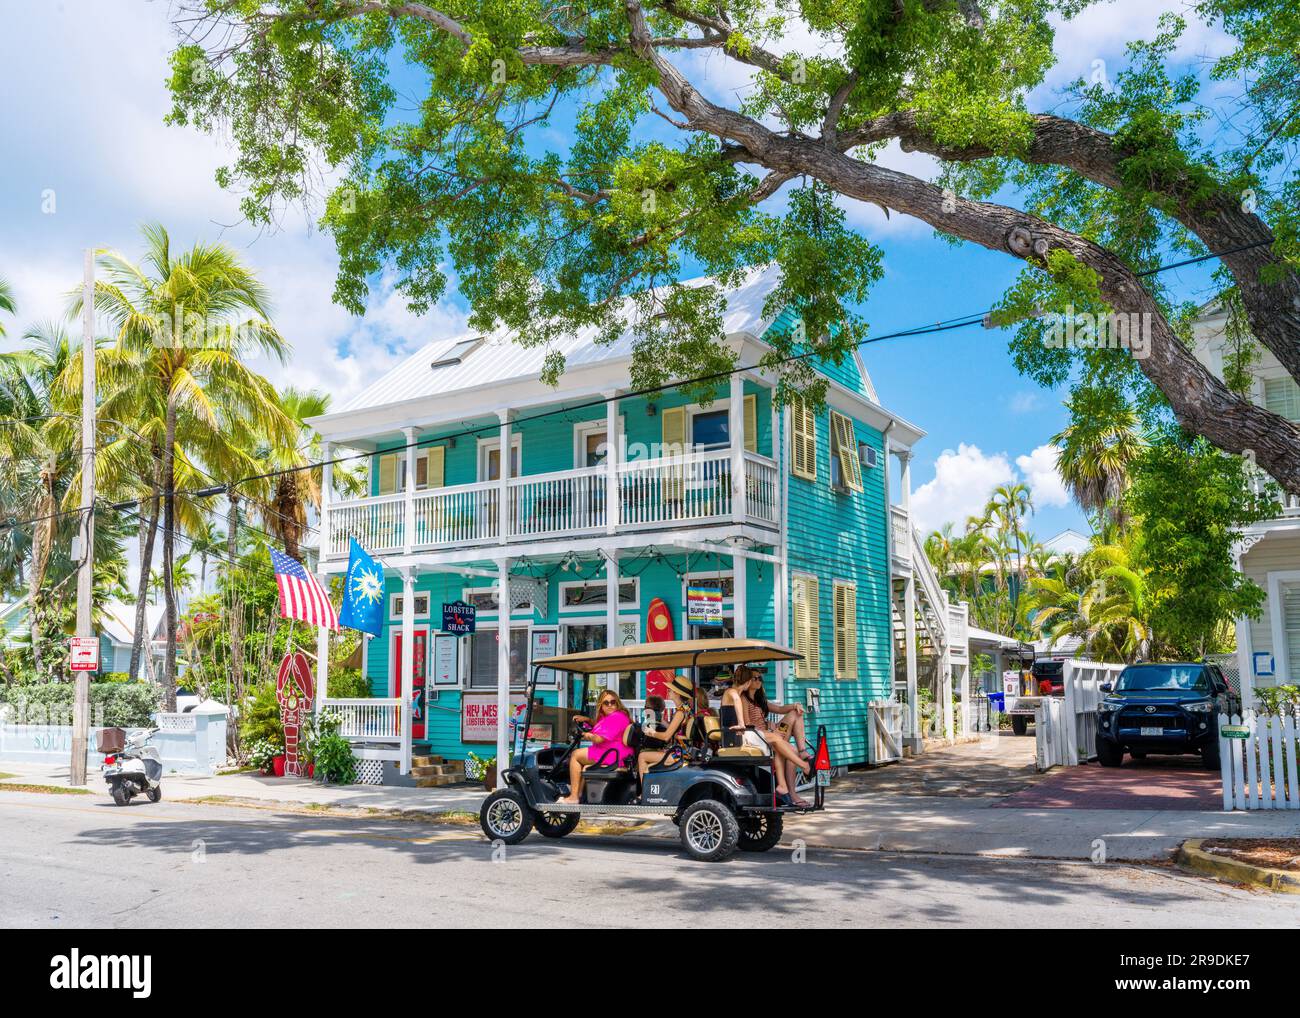 Cabaña de langosta, arquitectura tropical Key West, Florida, Estados Unidos Foto de stock